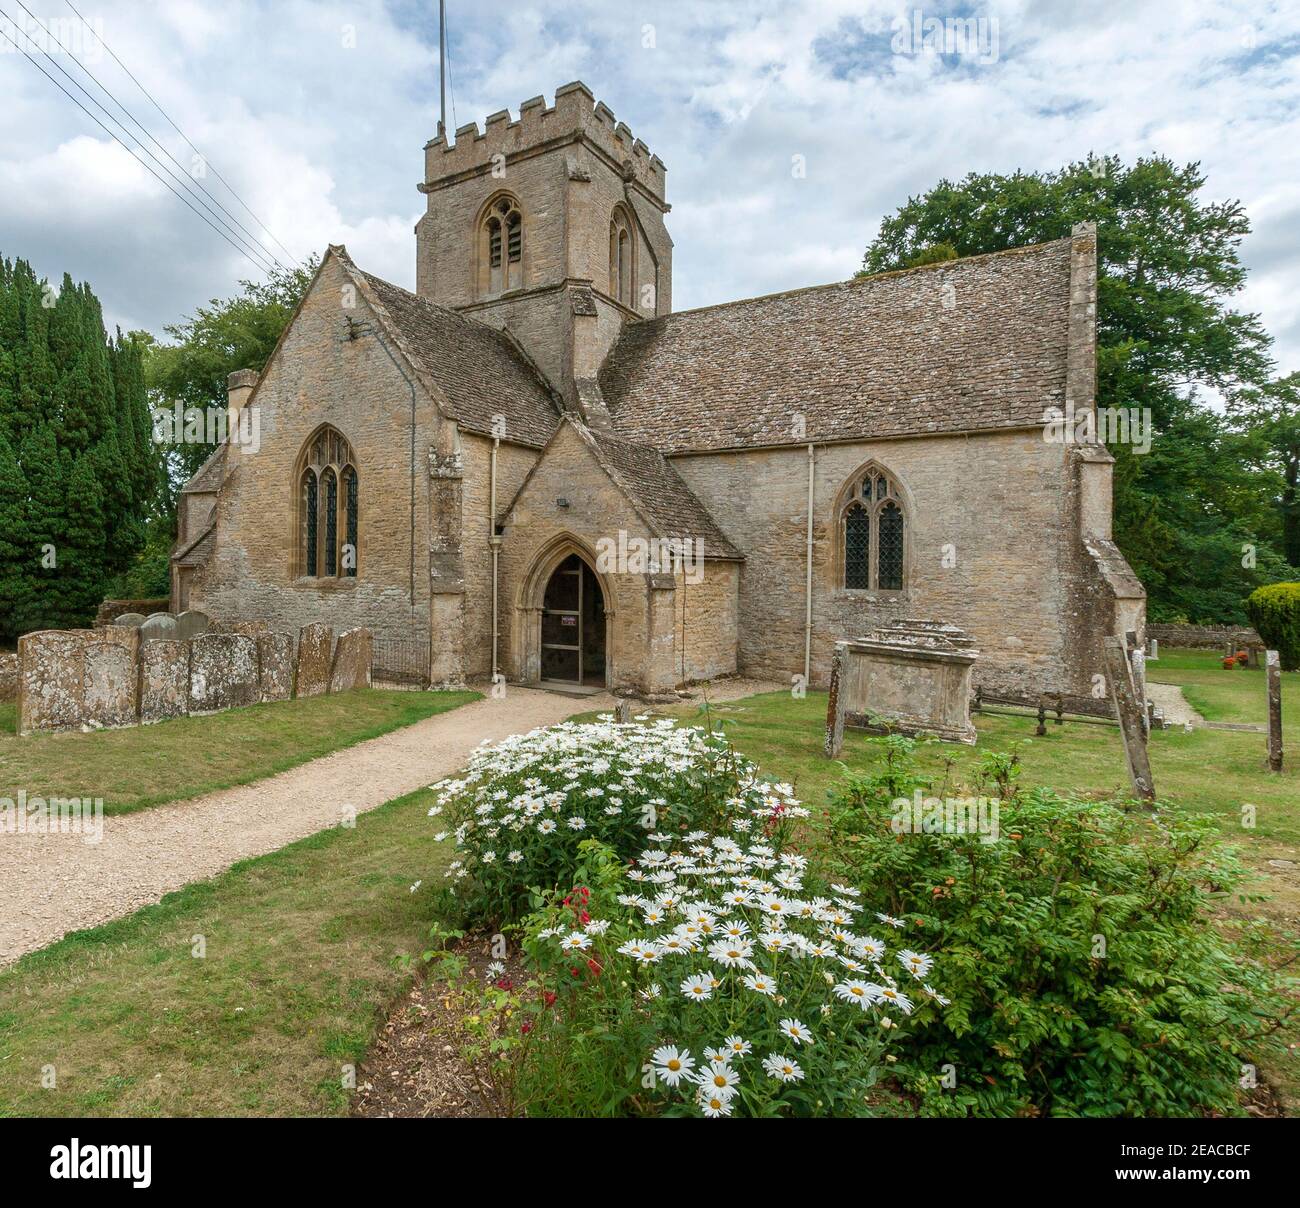 UK, Oxfordshire, Minster Lovell near Witney, St. Kenelm's Parish Church, in Old Minster, Saxon Saint Kenelm, next to Minster Lovell Hall. Stock Photo